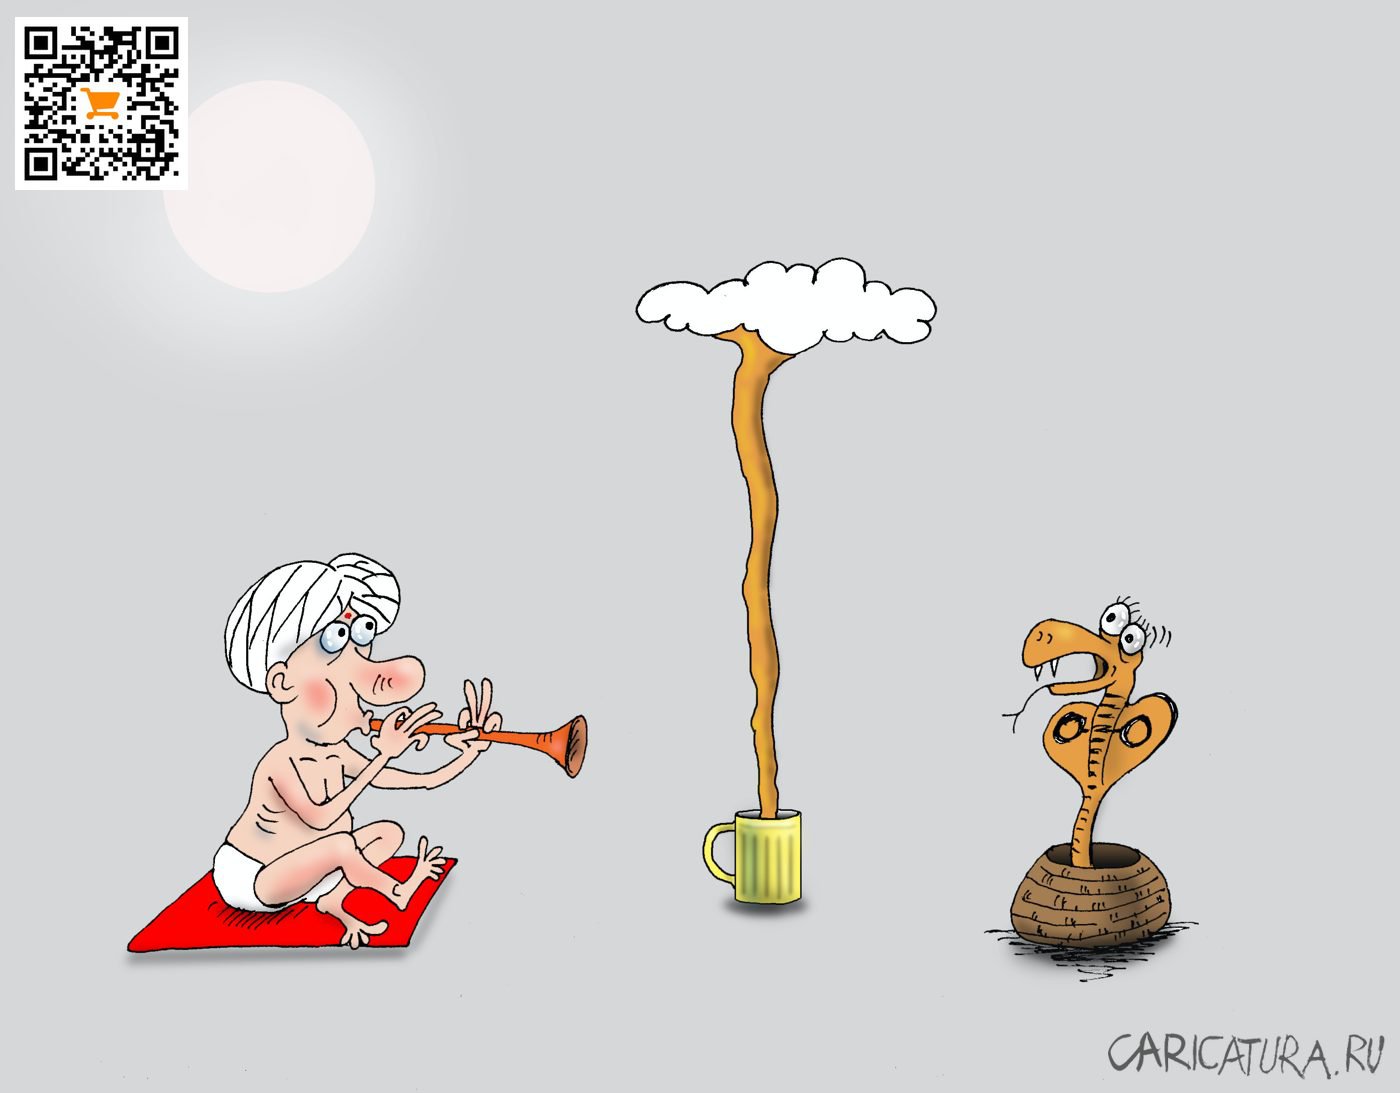 Карикатура "Живое пиво", Валерий Тарасенко